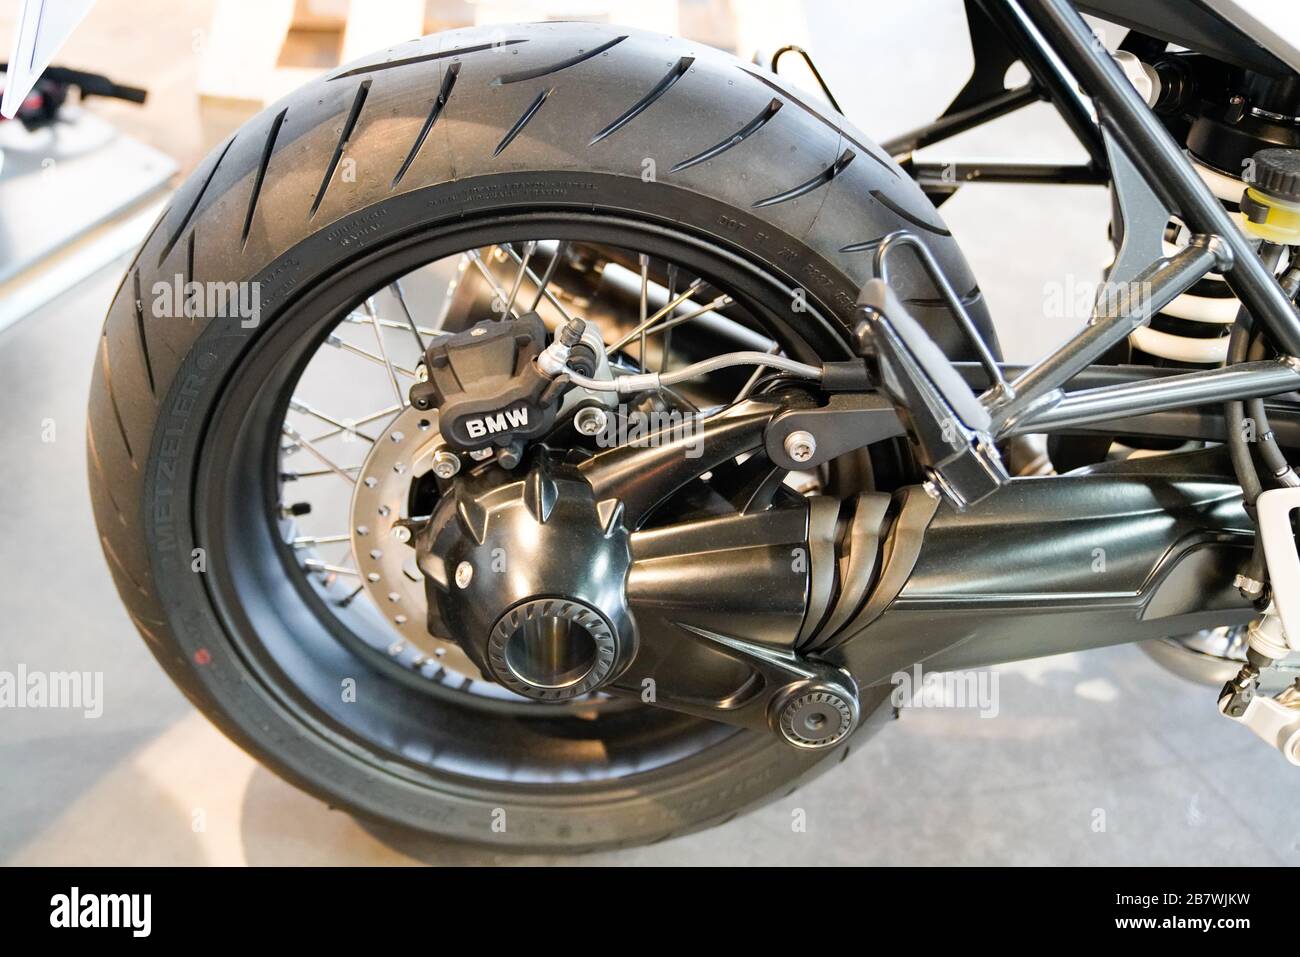 Kardan motorrad -Fotos und -Bildmaterial in hoher Auflösung – Alamy